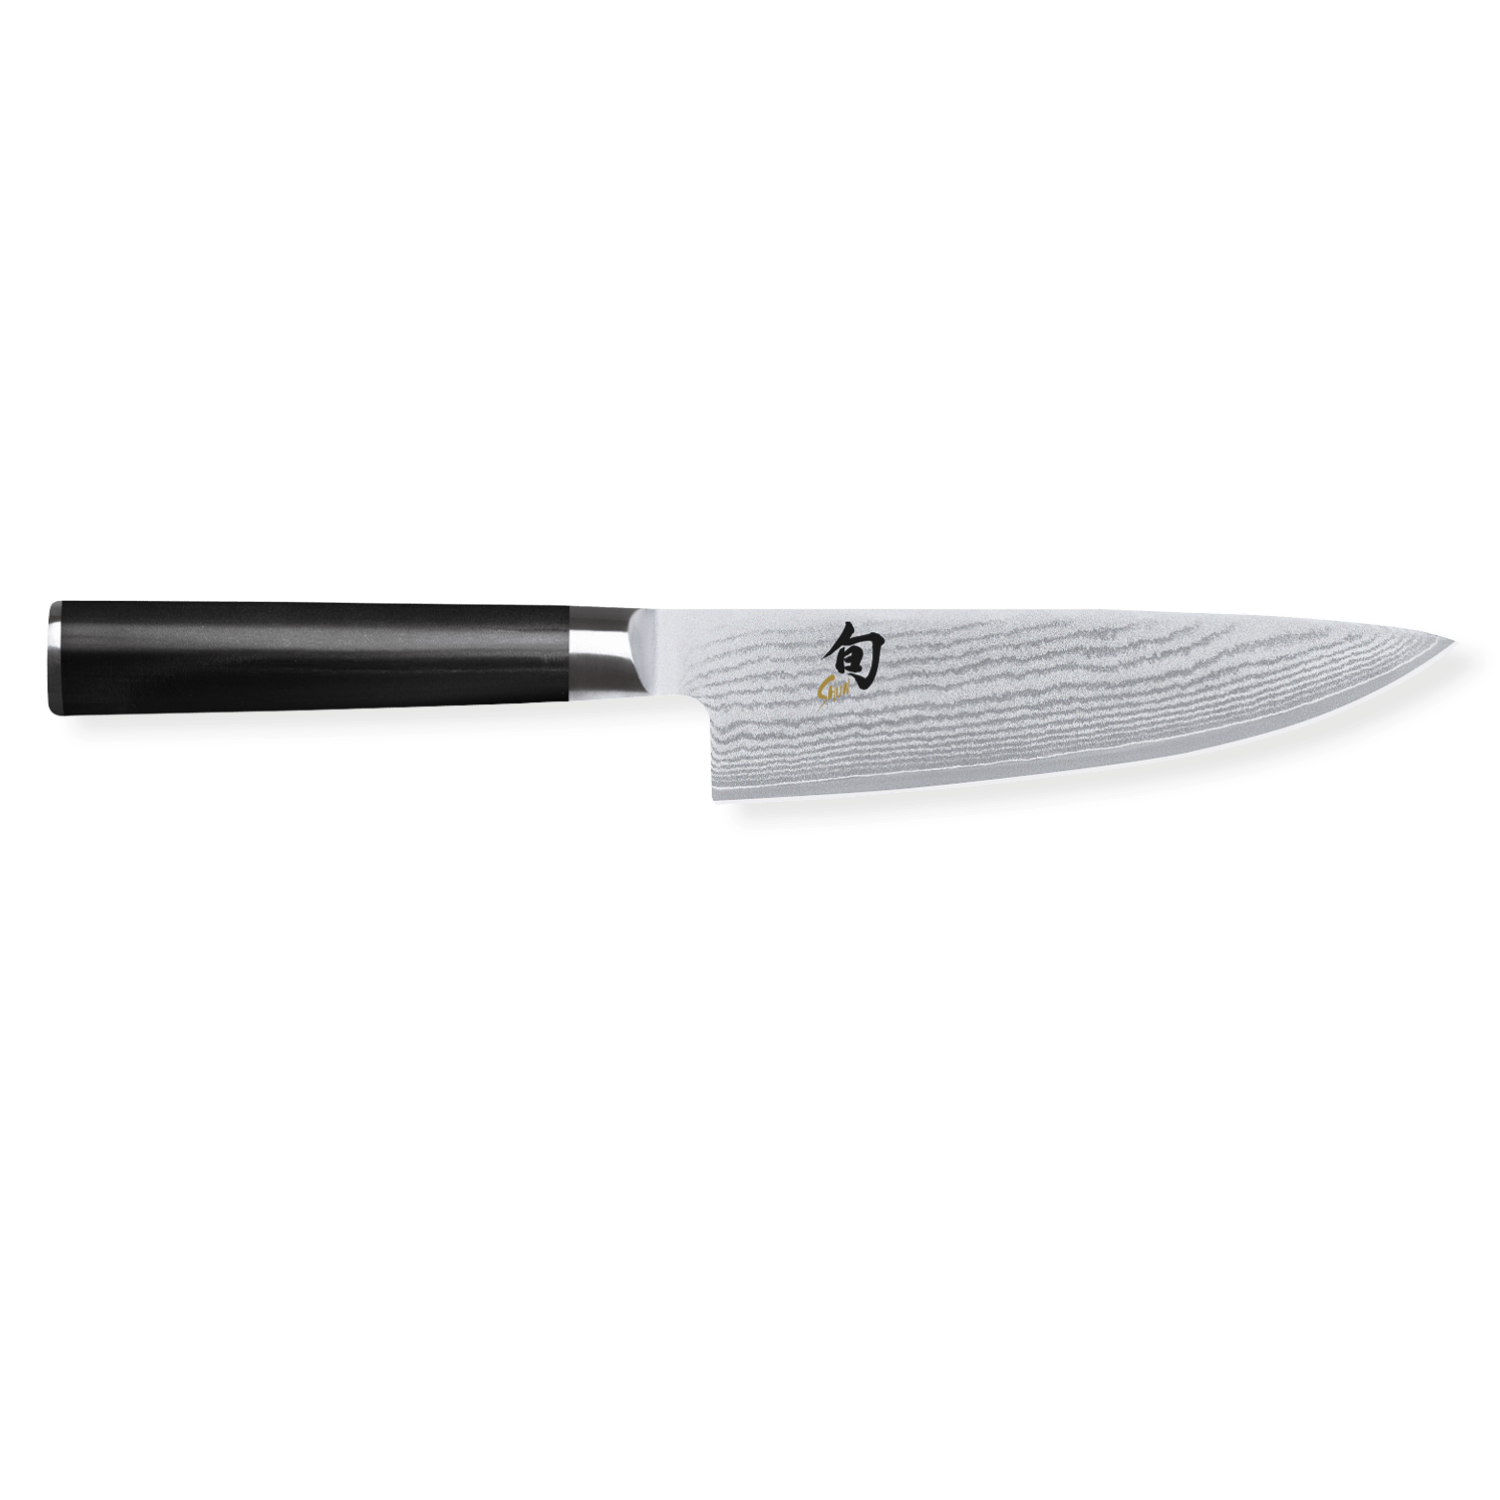 Kai Shun Classic Chef's Knife 20cm